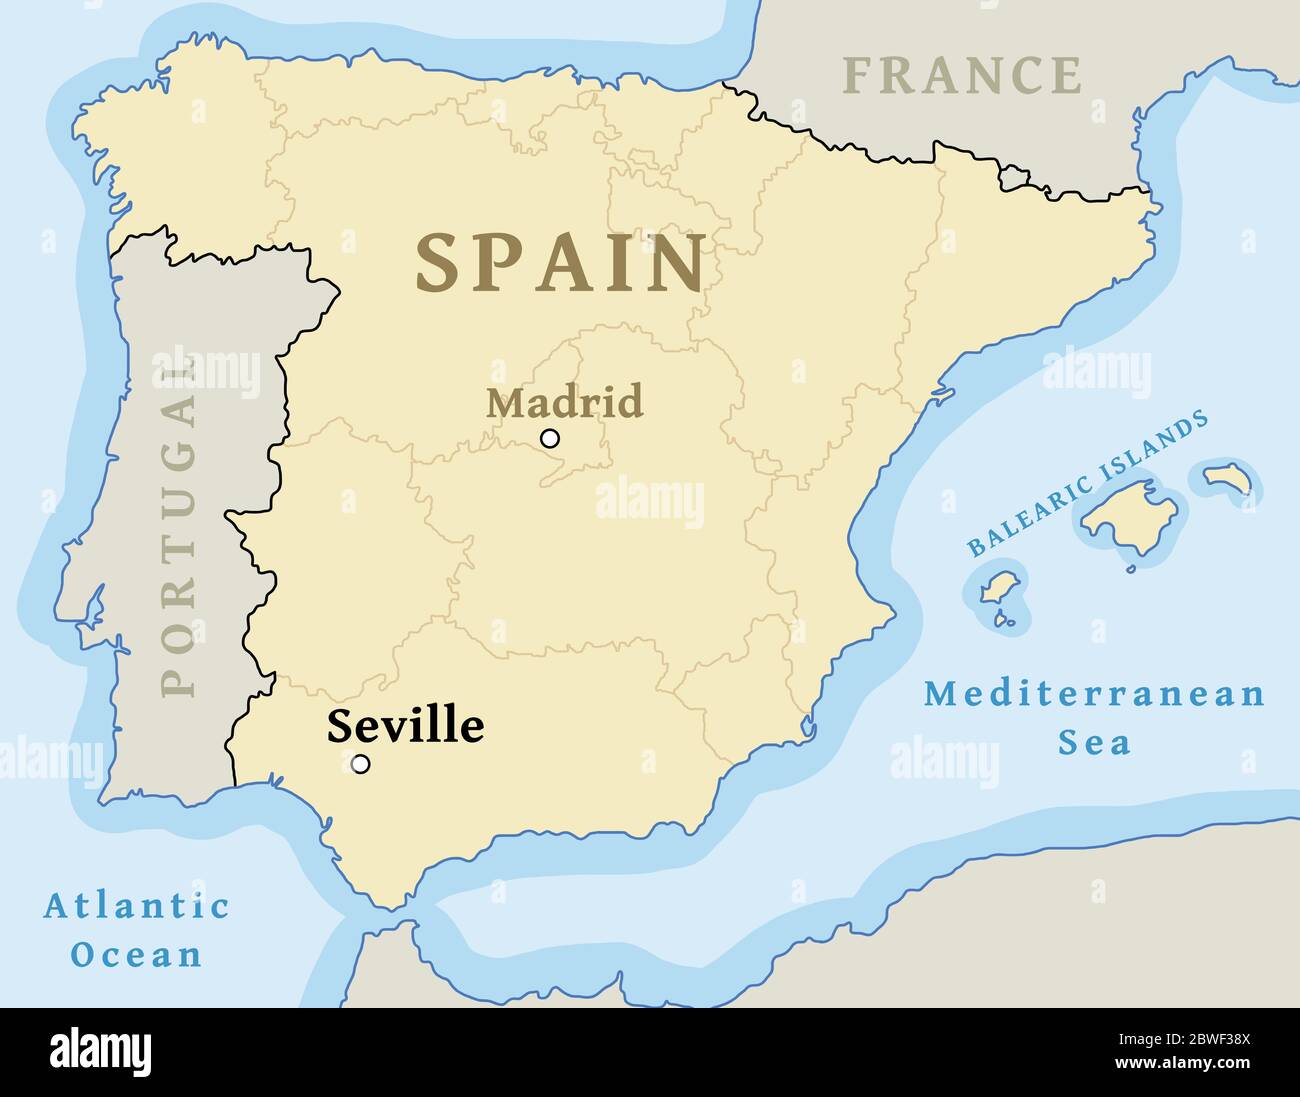 Seville Map Immagini E Fotos Stock Alamy